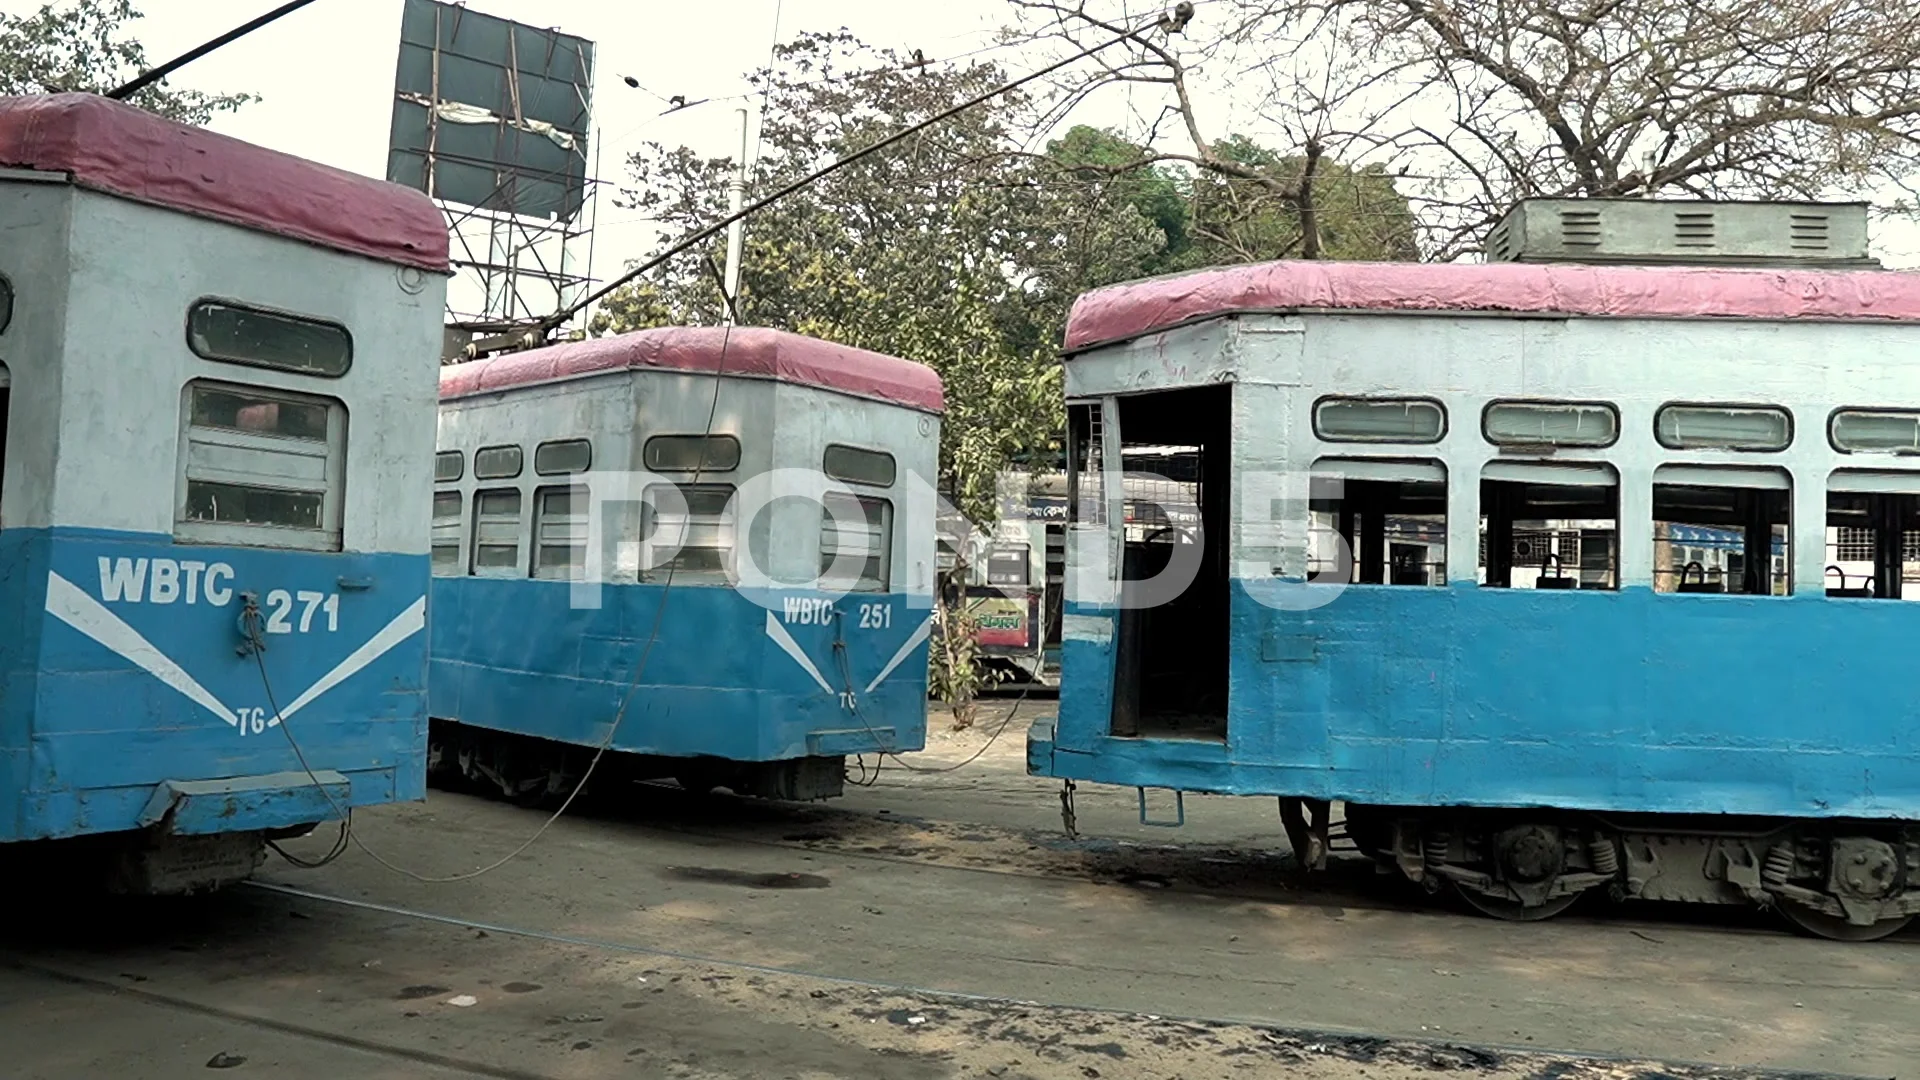 210 Kolkata Tram Stock Photos Pictures  RoyaltyFree Images  iStock